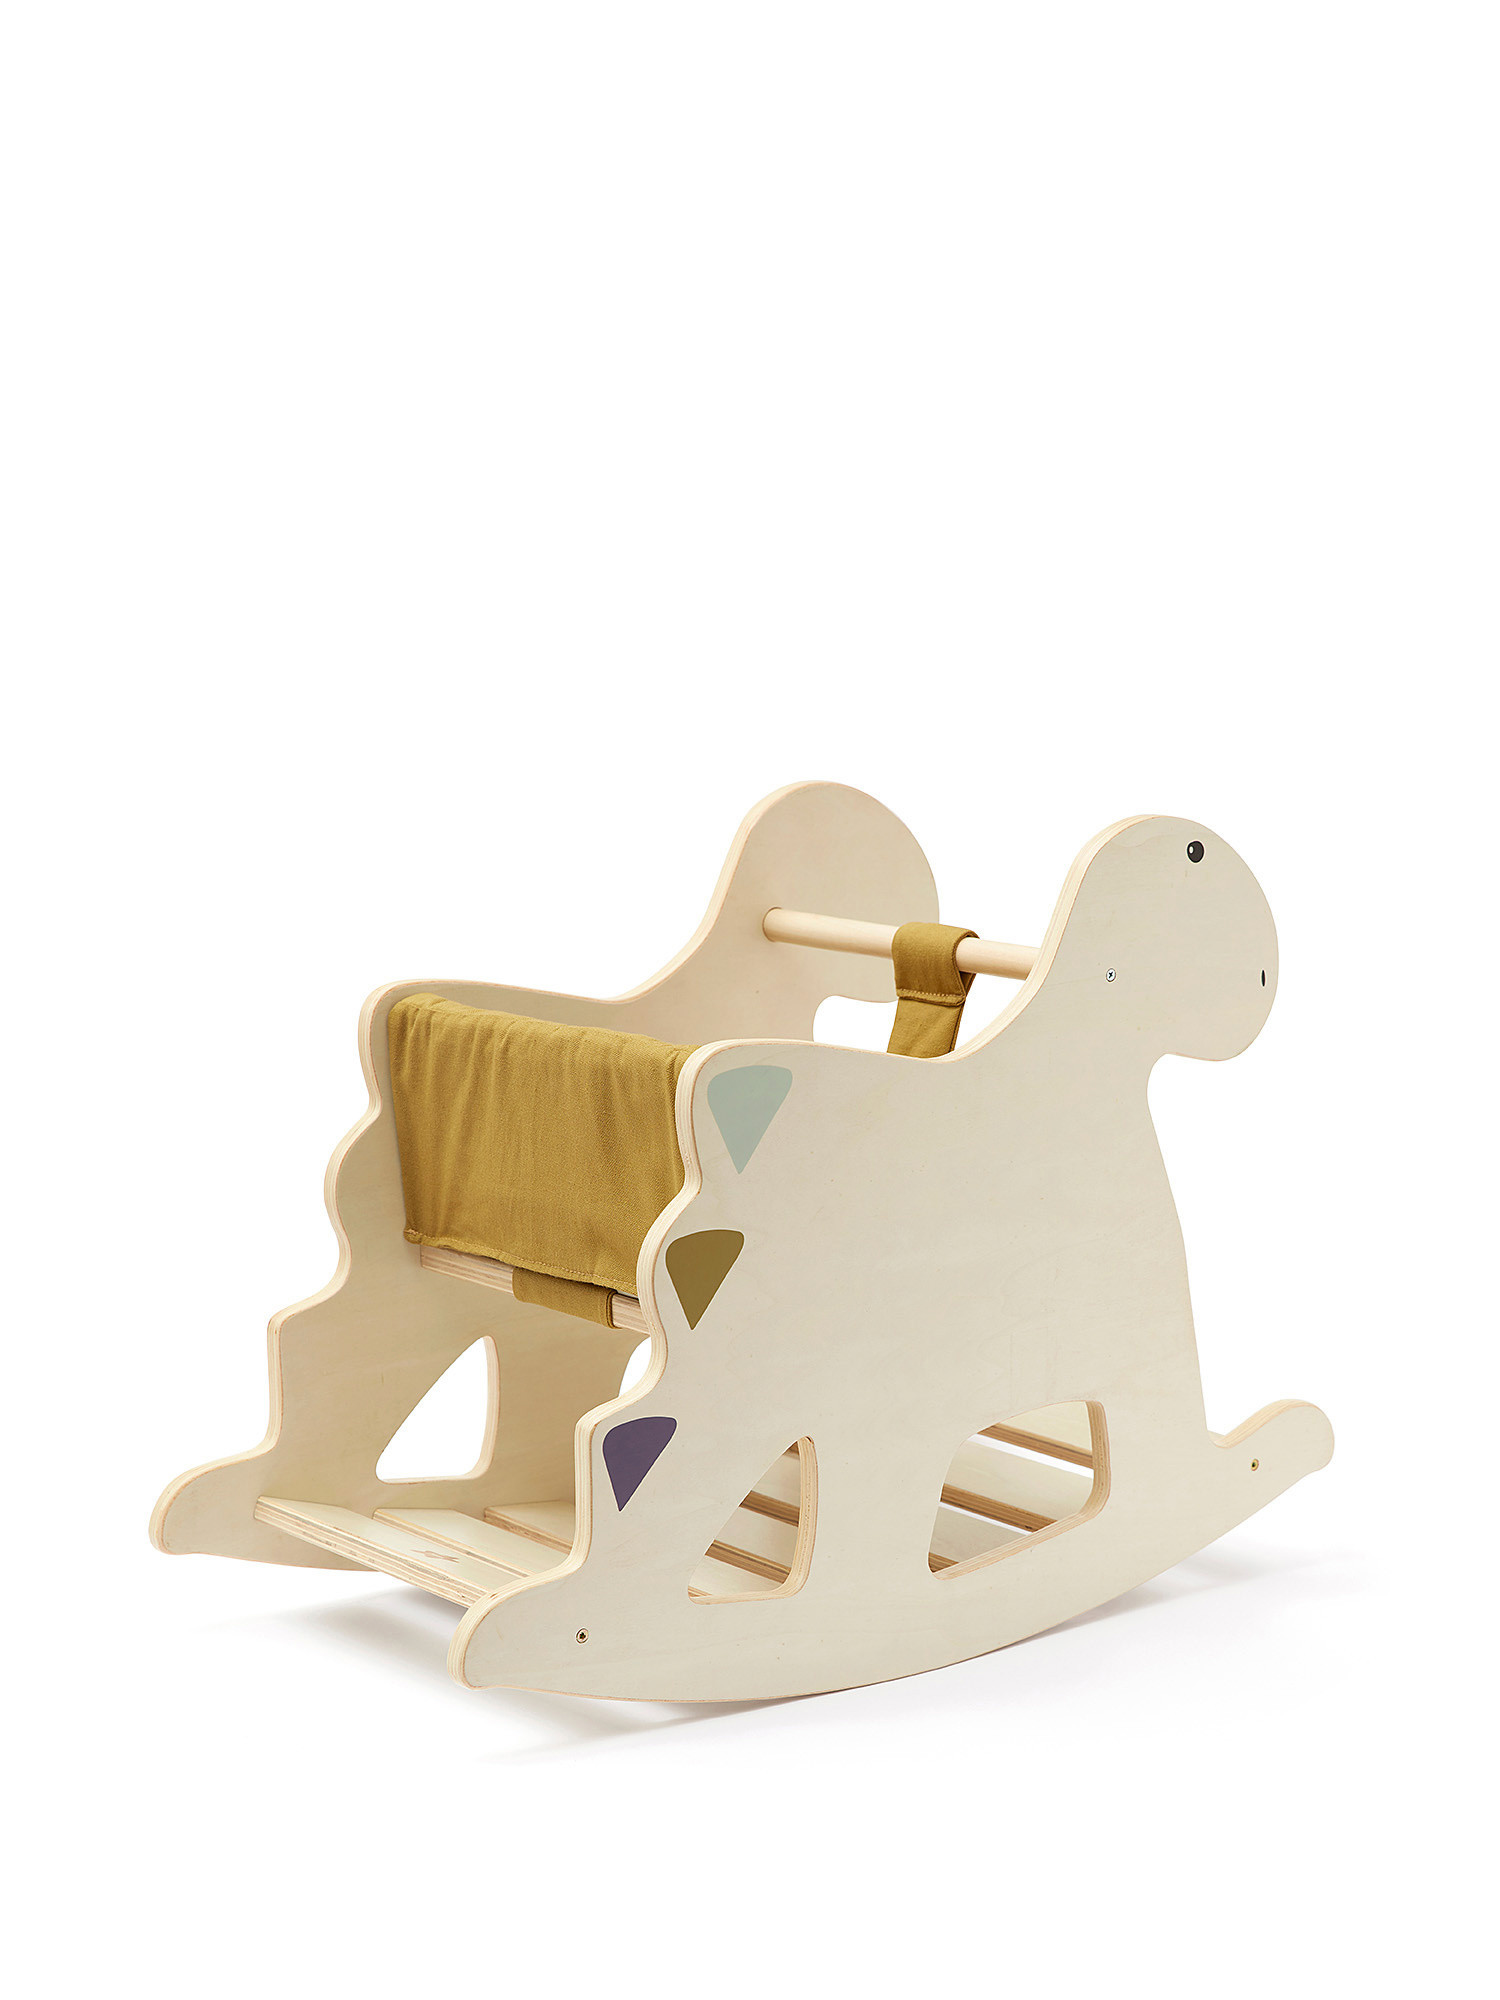 Dinosaur-shaped wooden swing seat, Cream, large image number 2